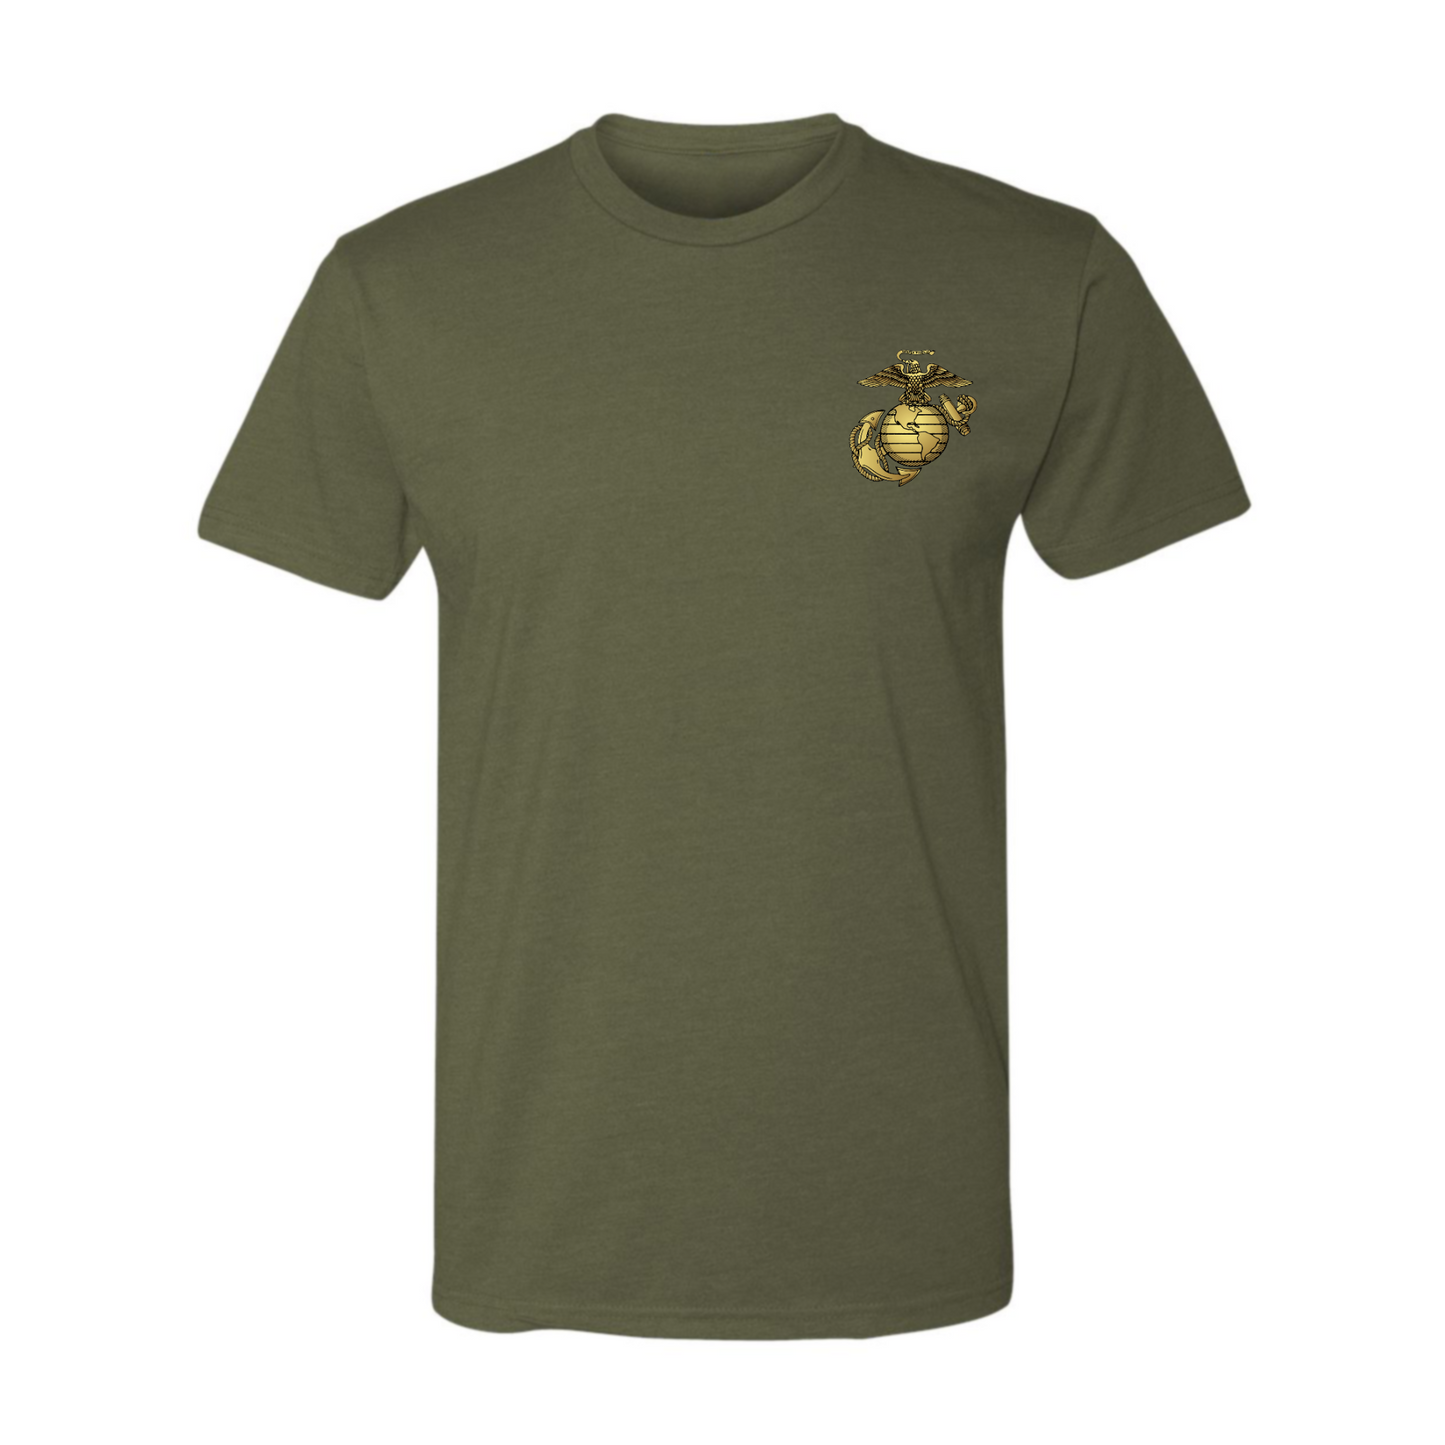 USMC shirt Improvise Adapt Overcome